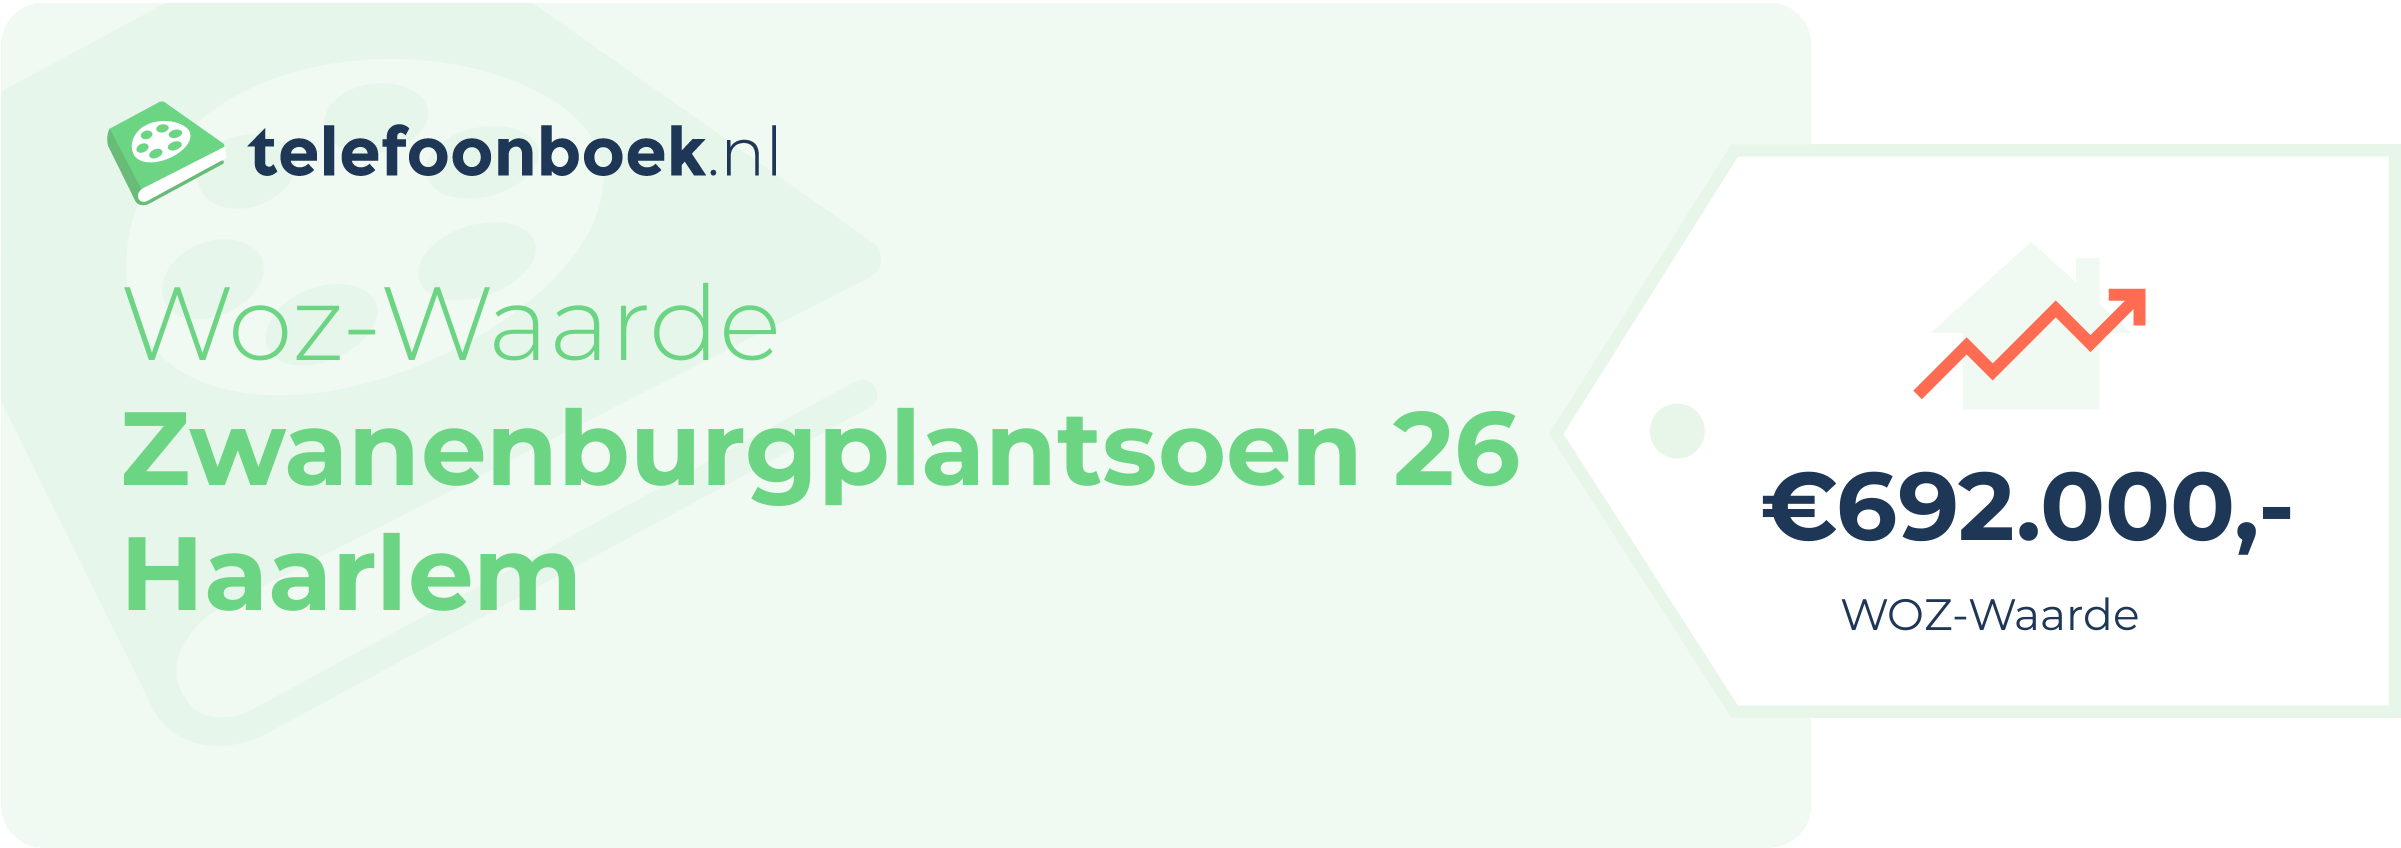 WOZ-waarde Zwanenburgplantsoen 26 Haarlem